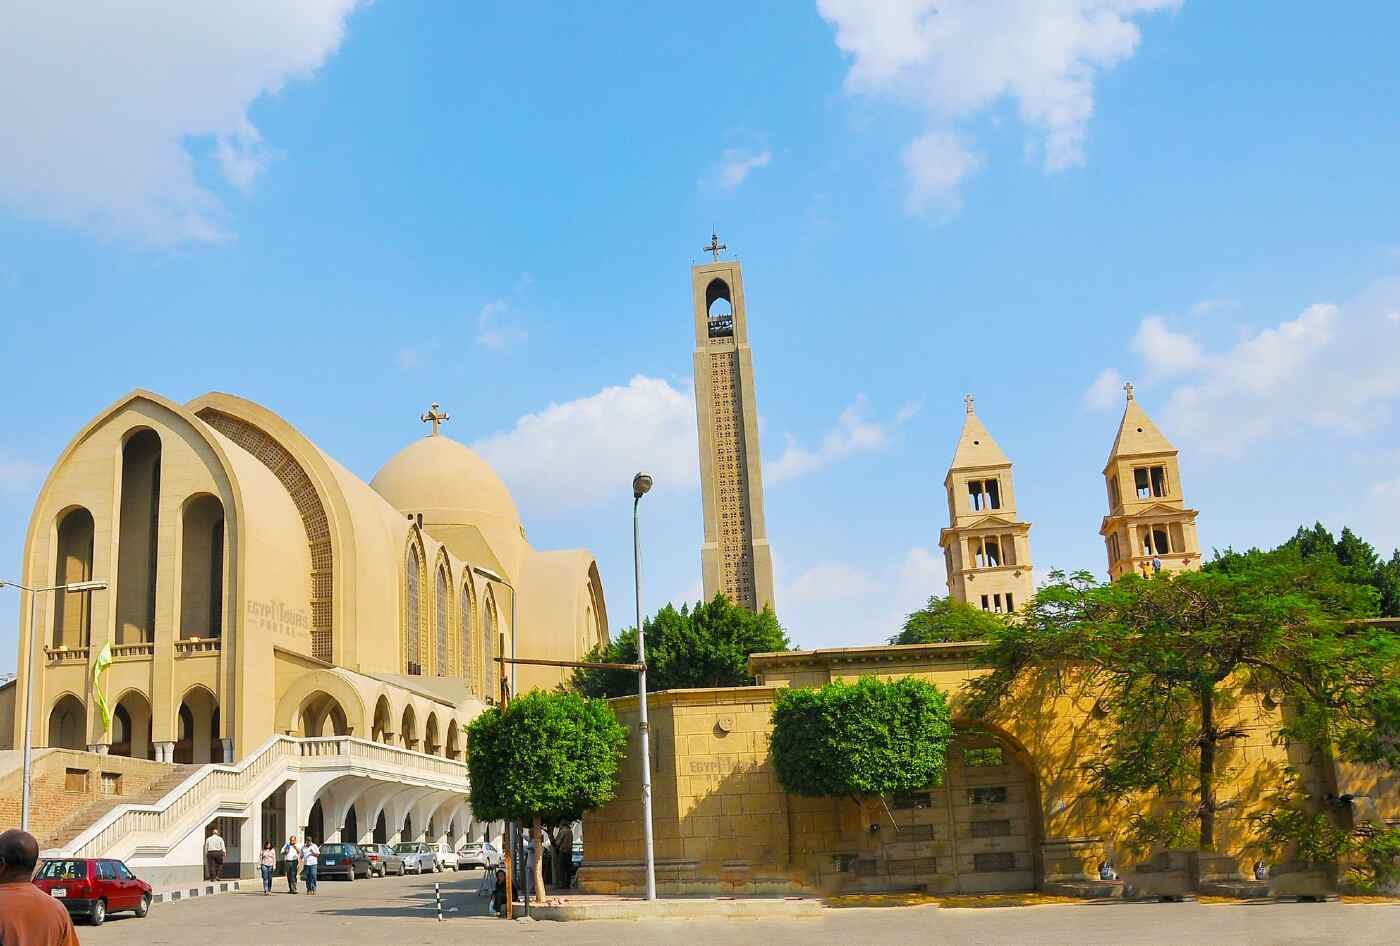 The Saint Mark Coptic Orthodox Church